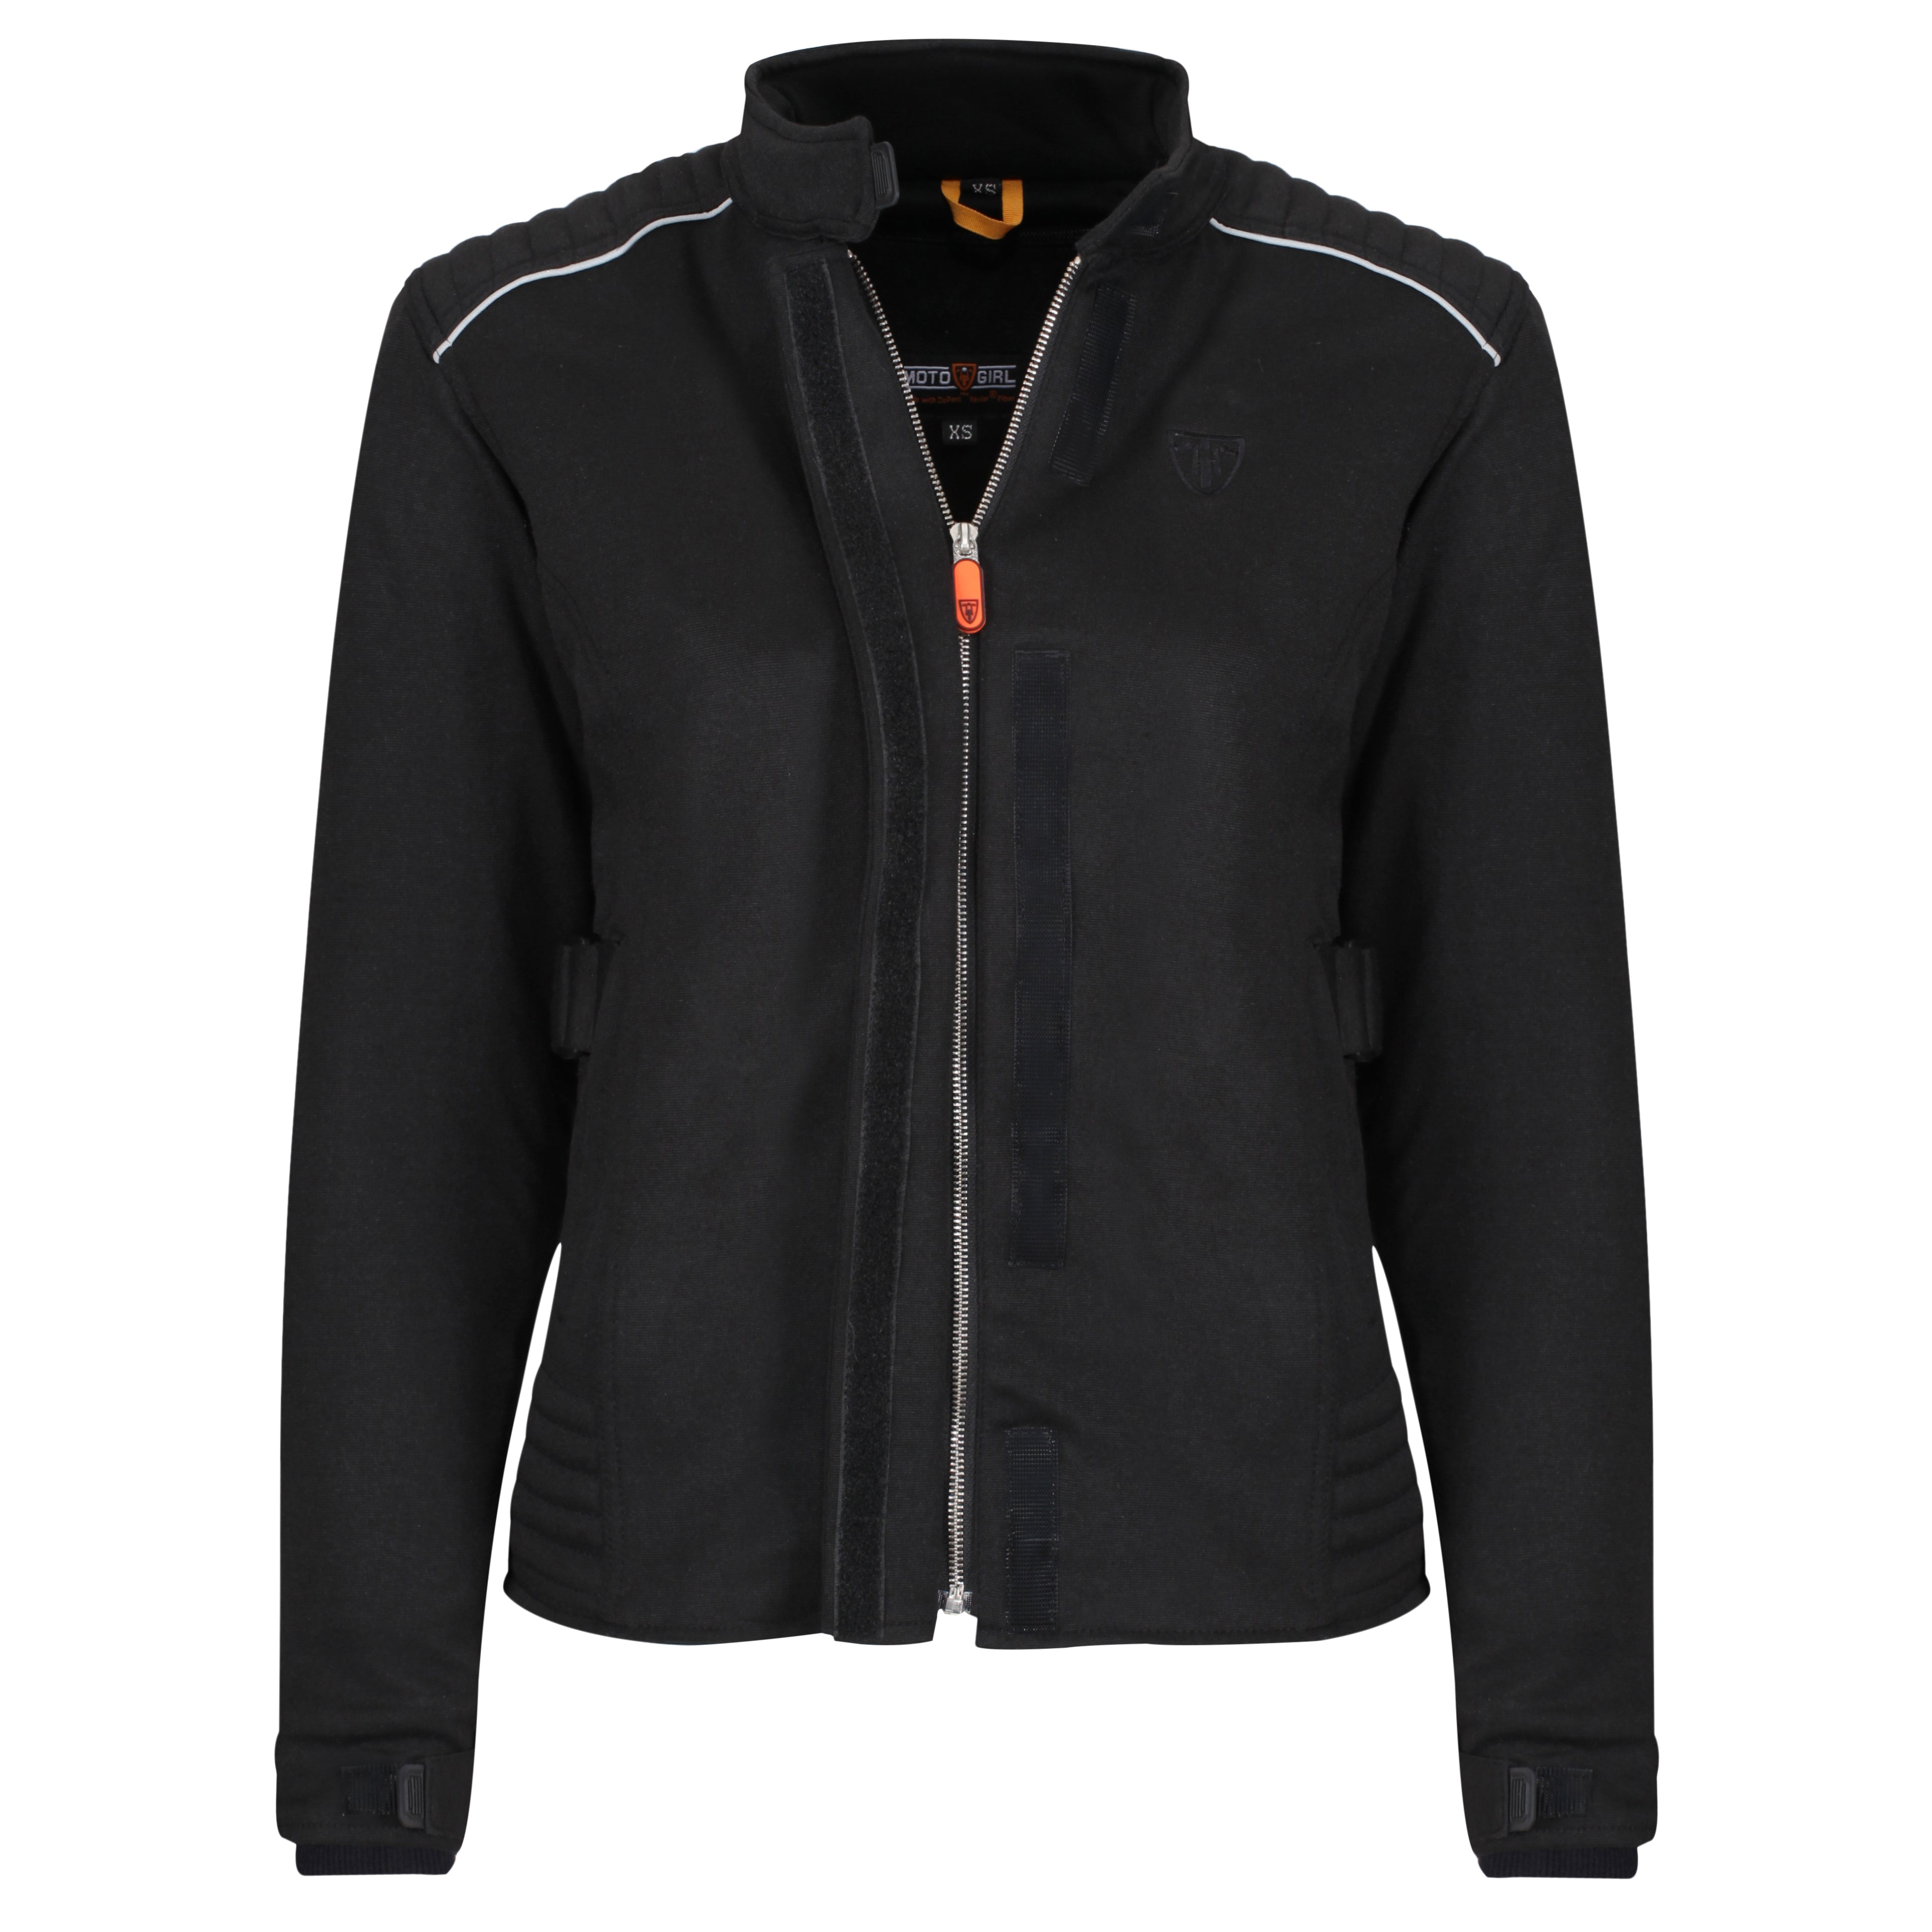 Women's textile black motorcycle jacket unzipped 